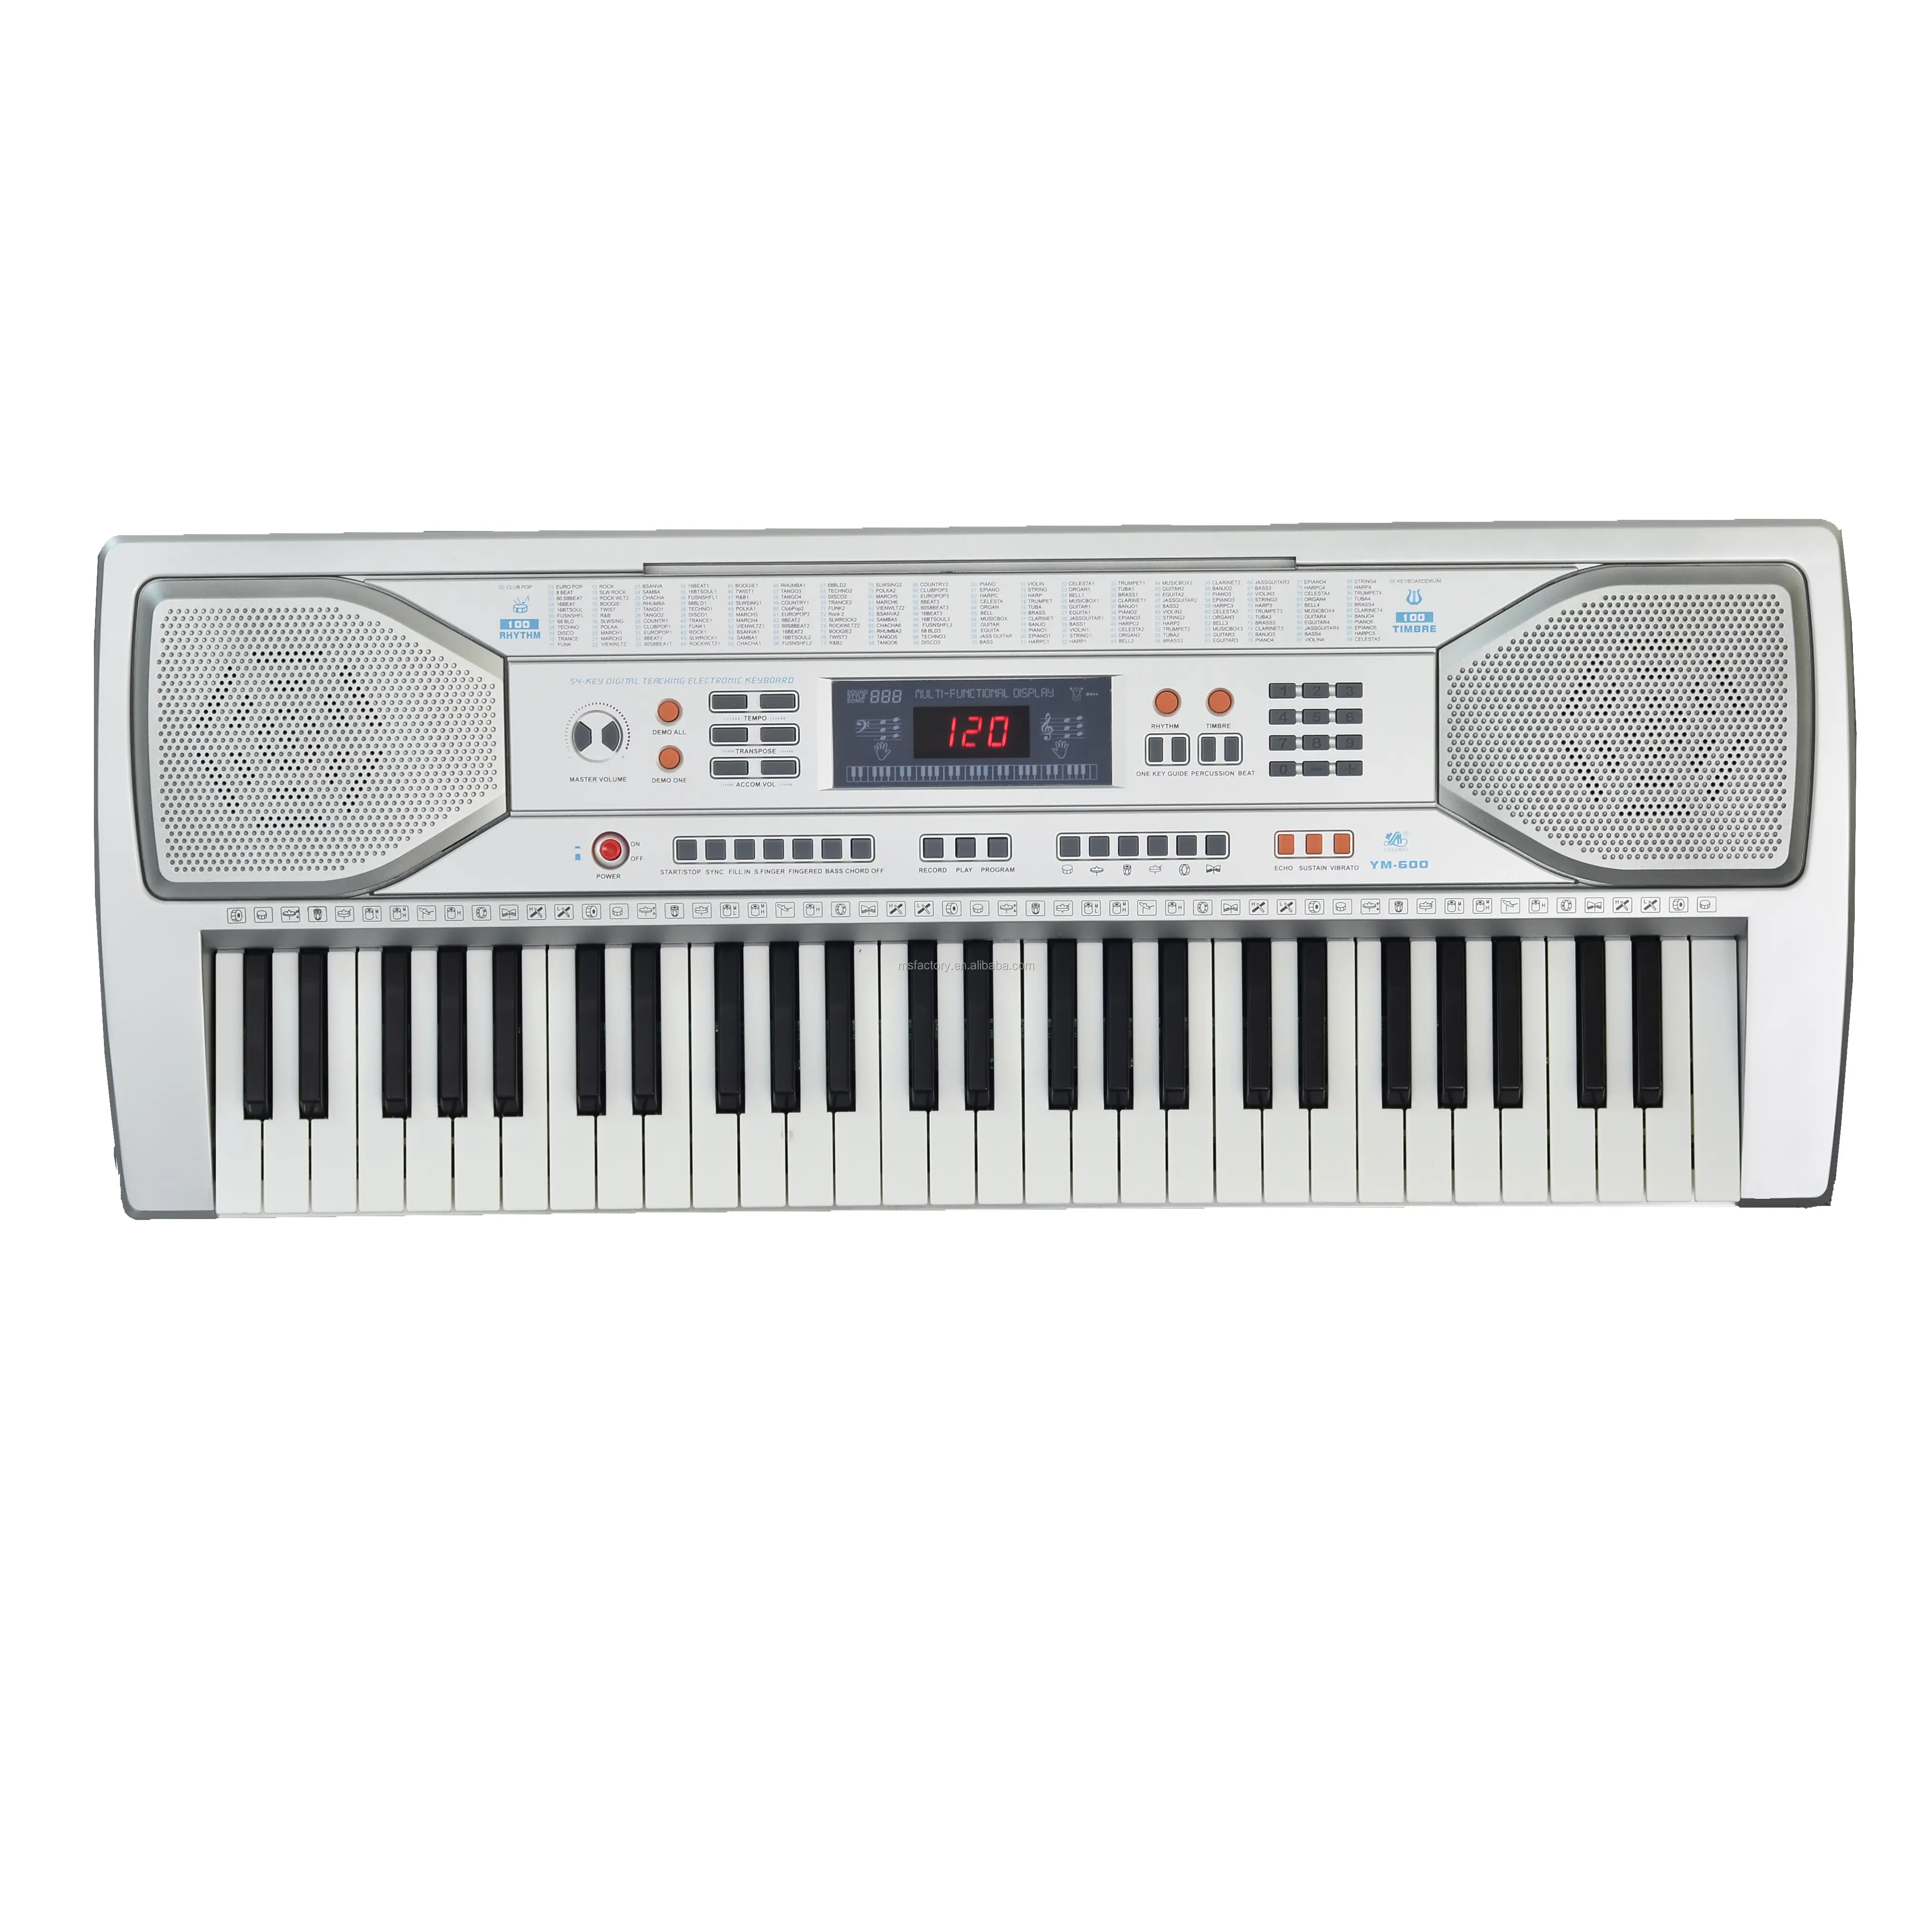 Musical yongmei ym 54 keys electronic keyboard